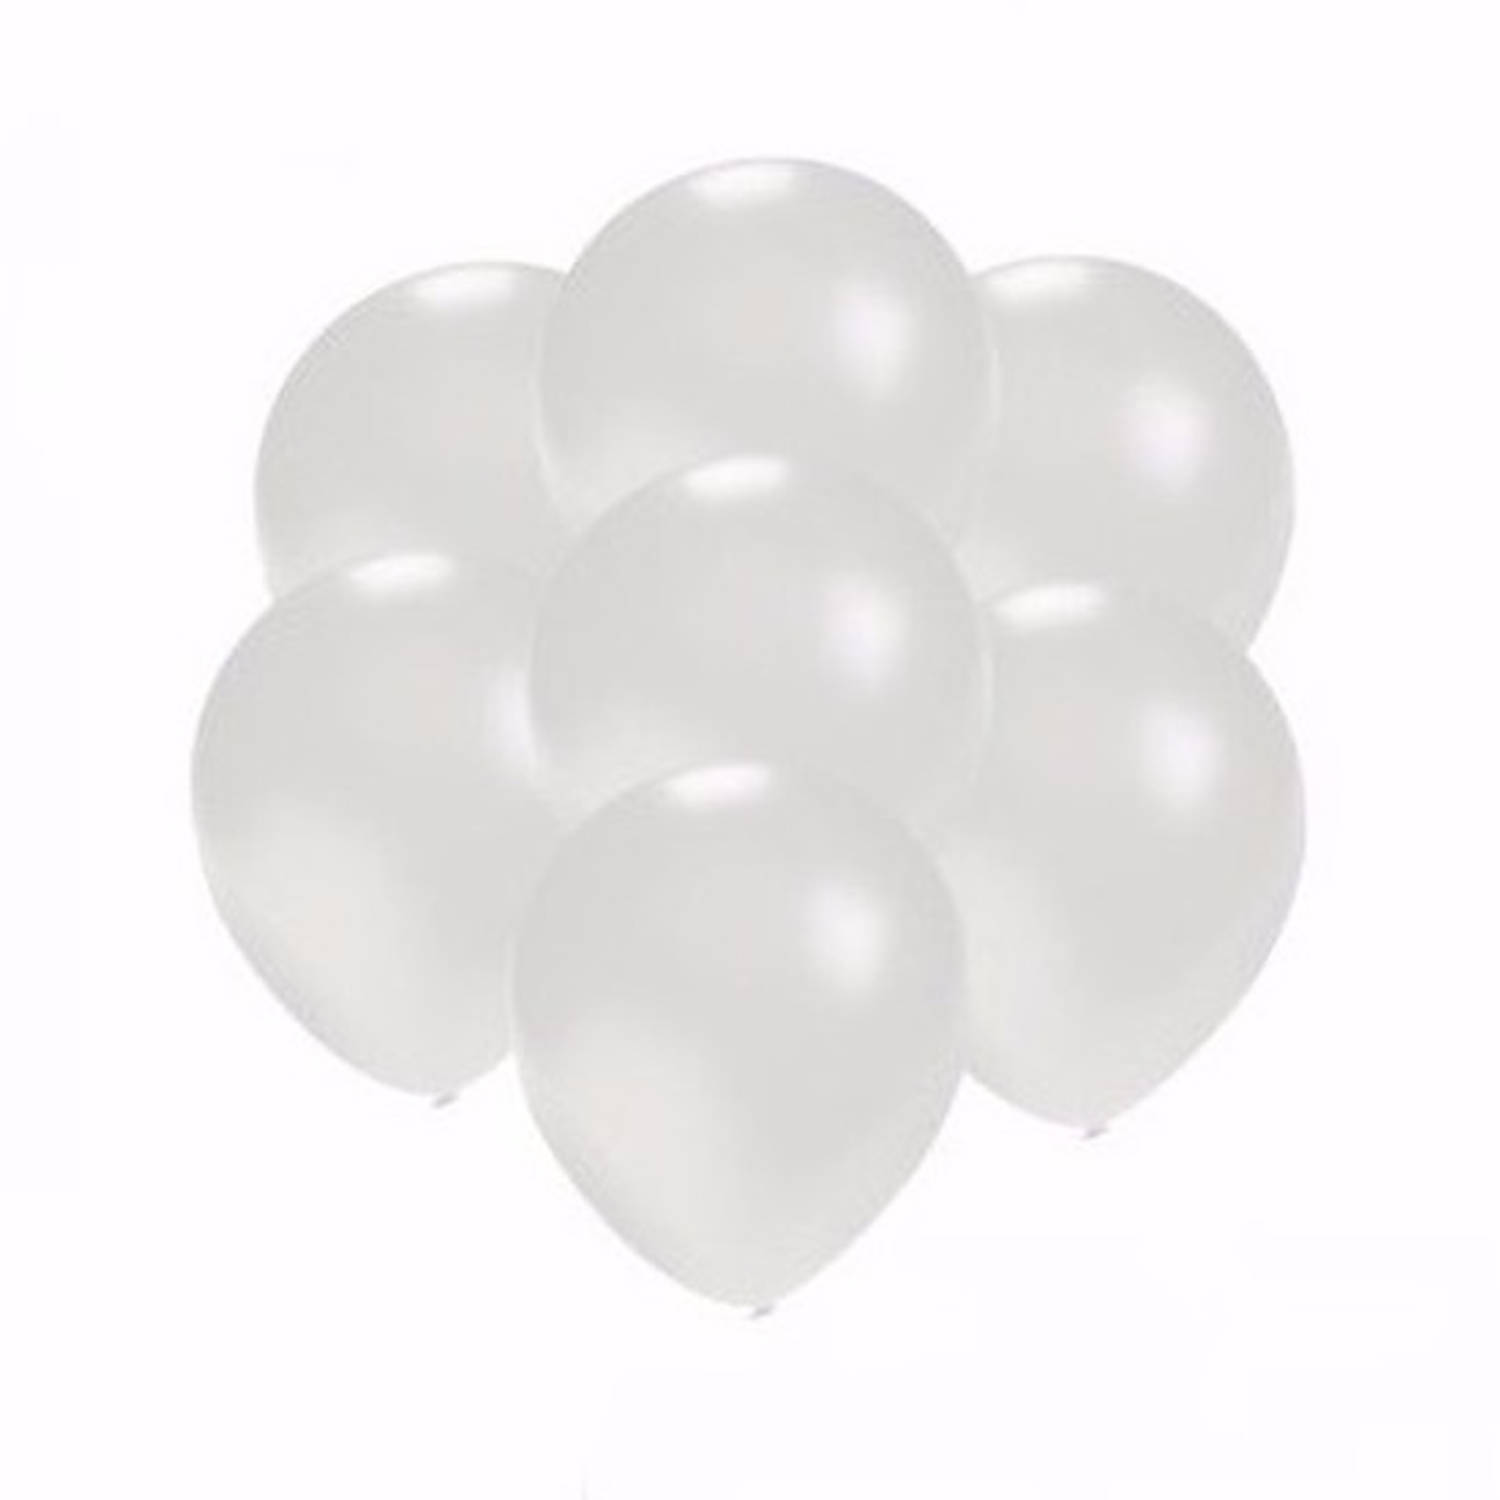 25x Voordelige metallic witte ballonnen klein - Ballonnen